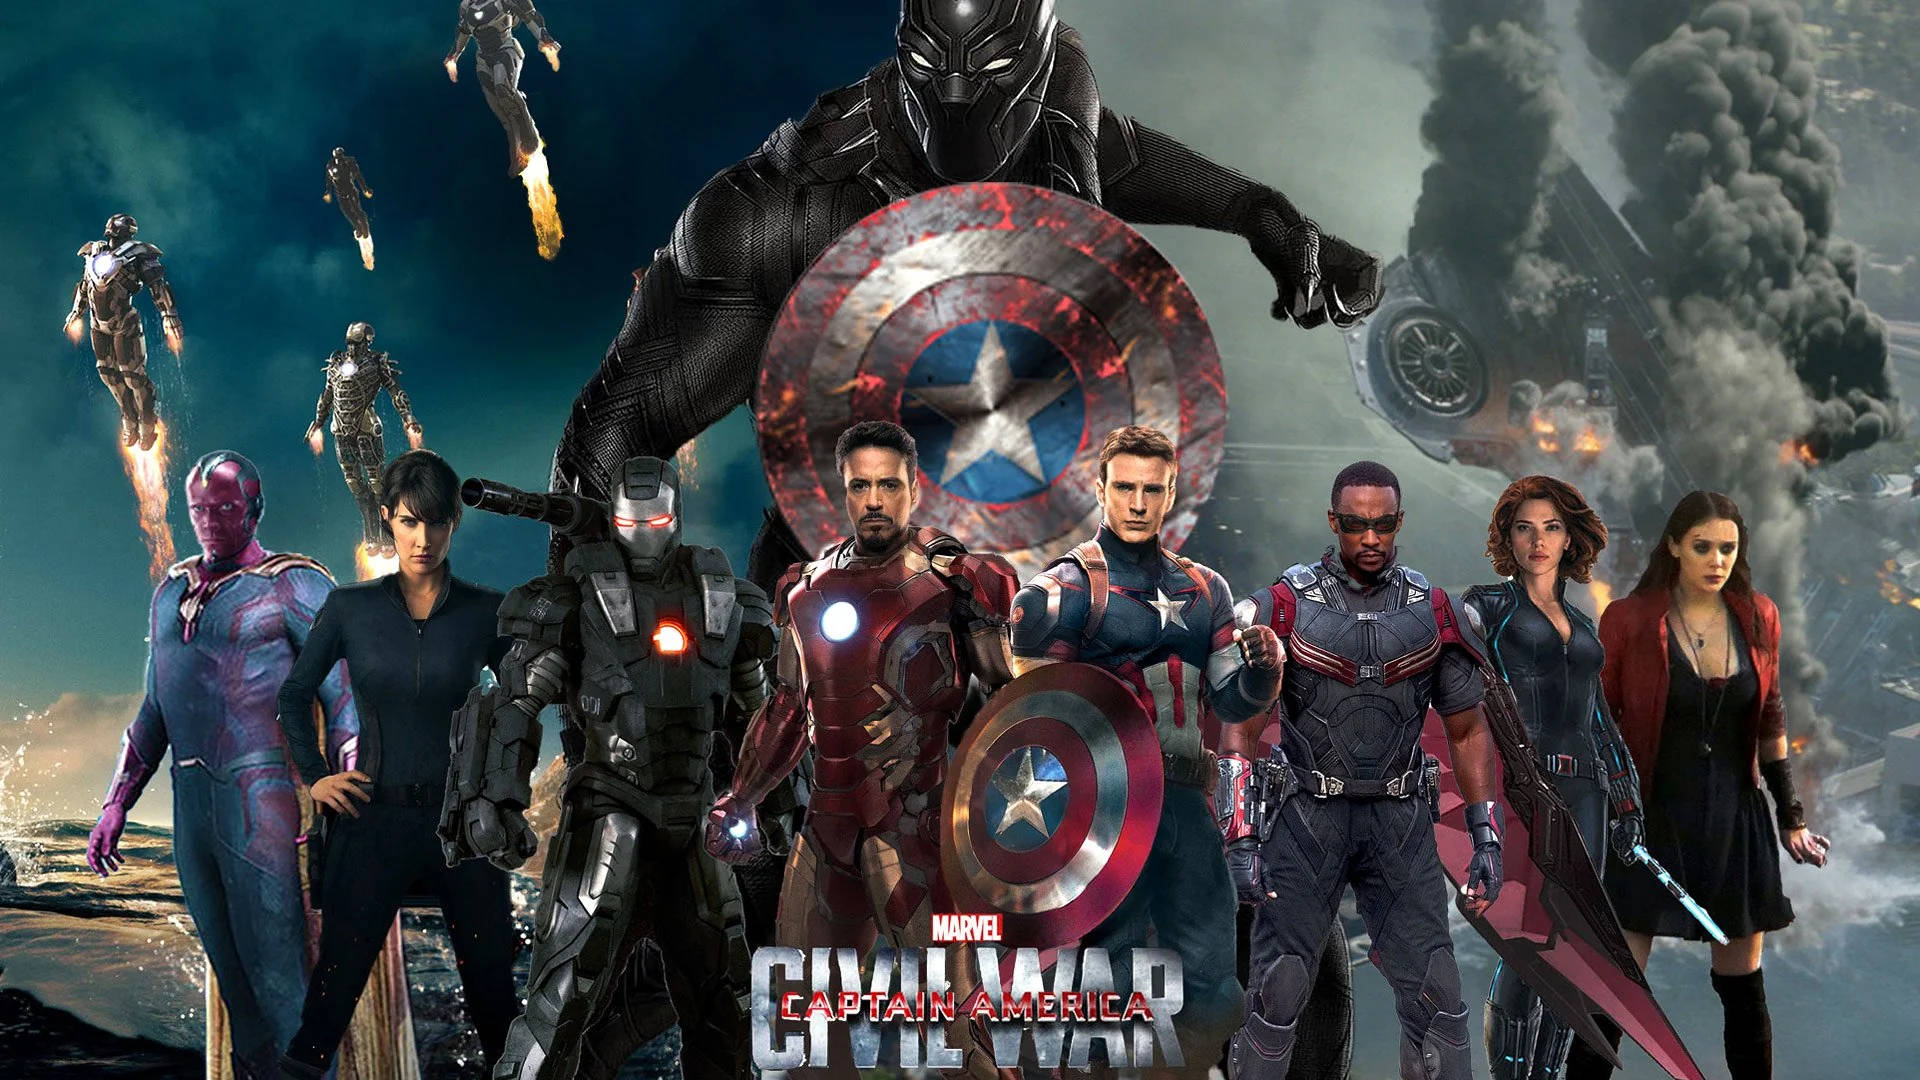 Avengers Lined Up Together Captain America Civil War Wallpaper